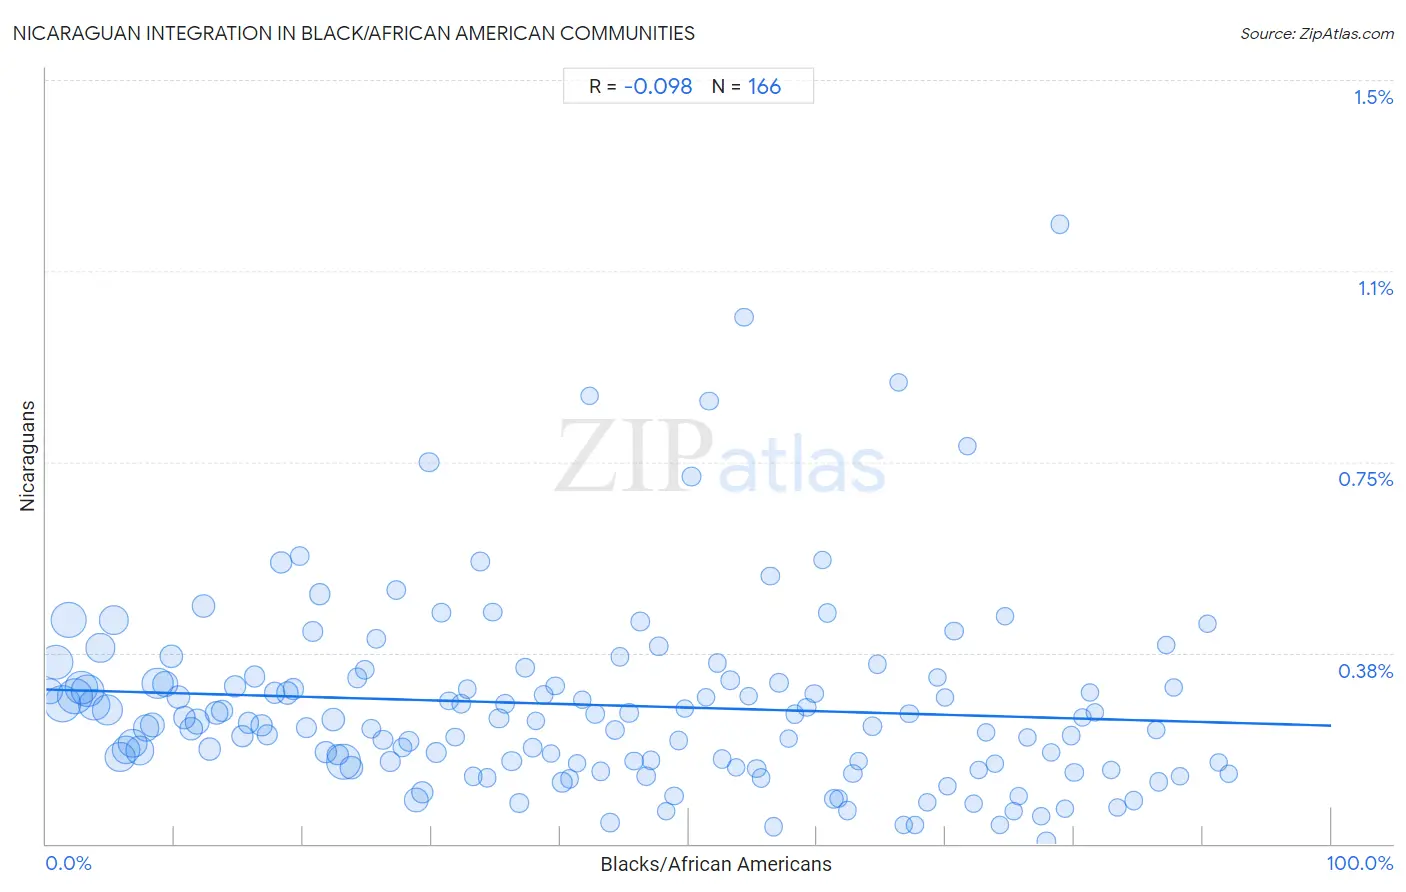 Black/African American Integration in Nicaraguan Communities